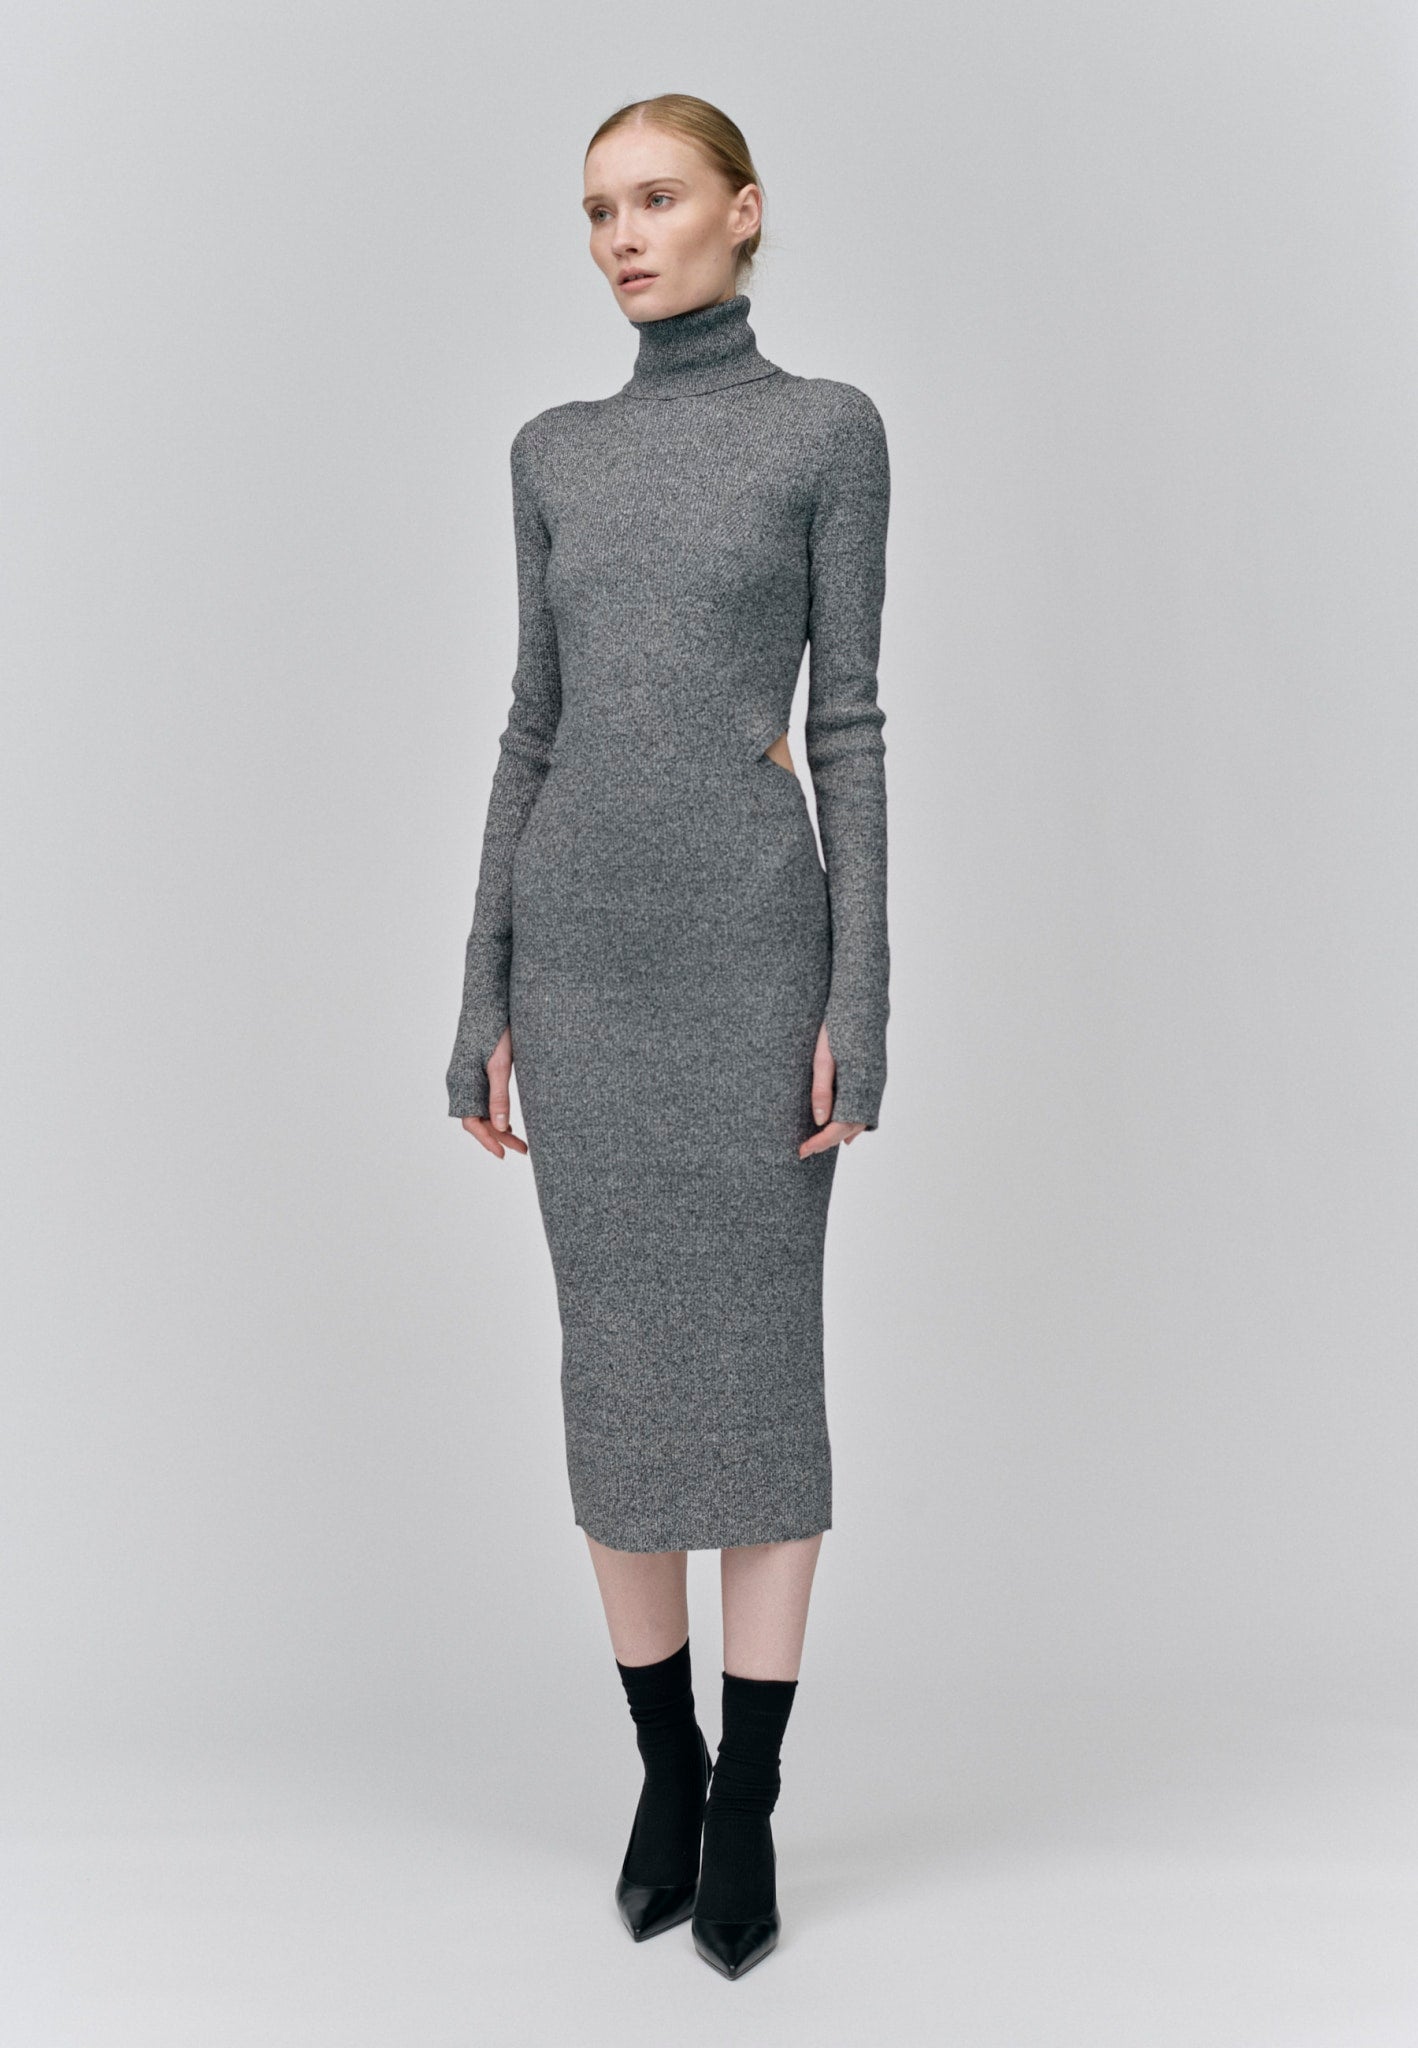 Fabienne Dress - Thunder Grey